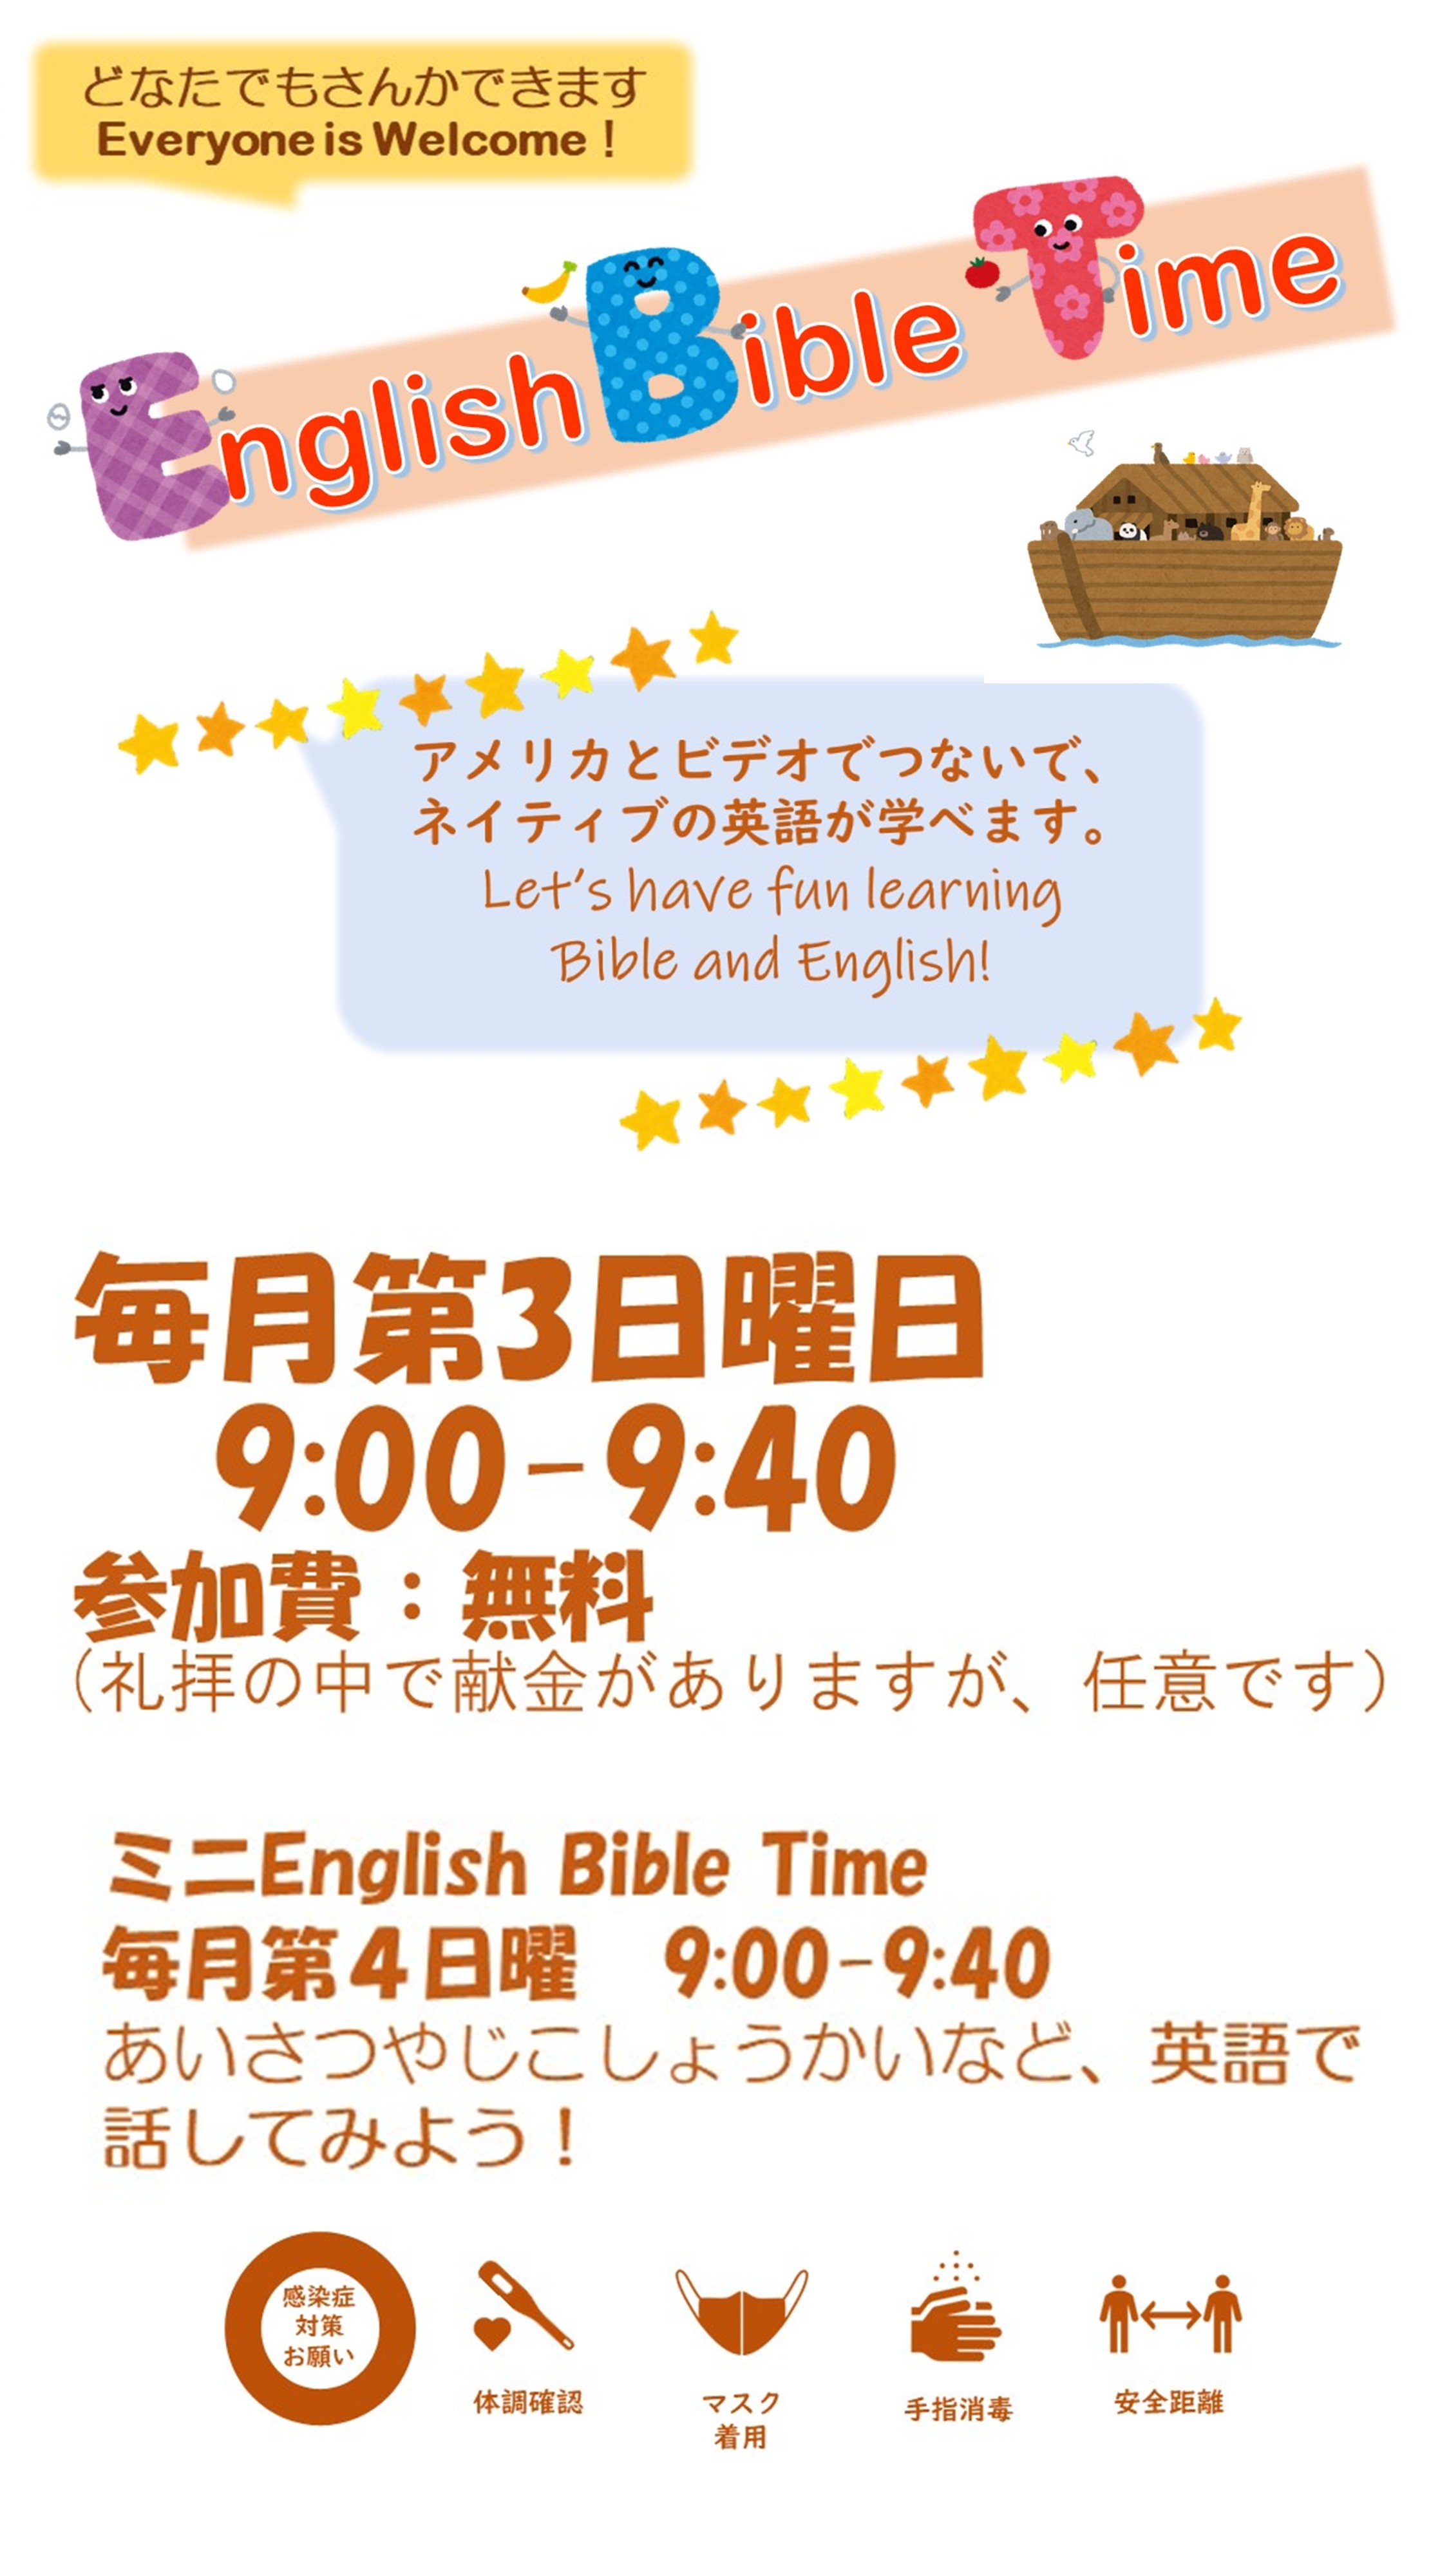 English Bible time